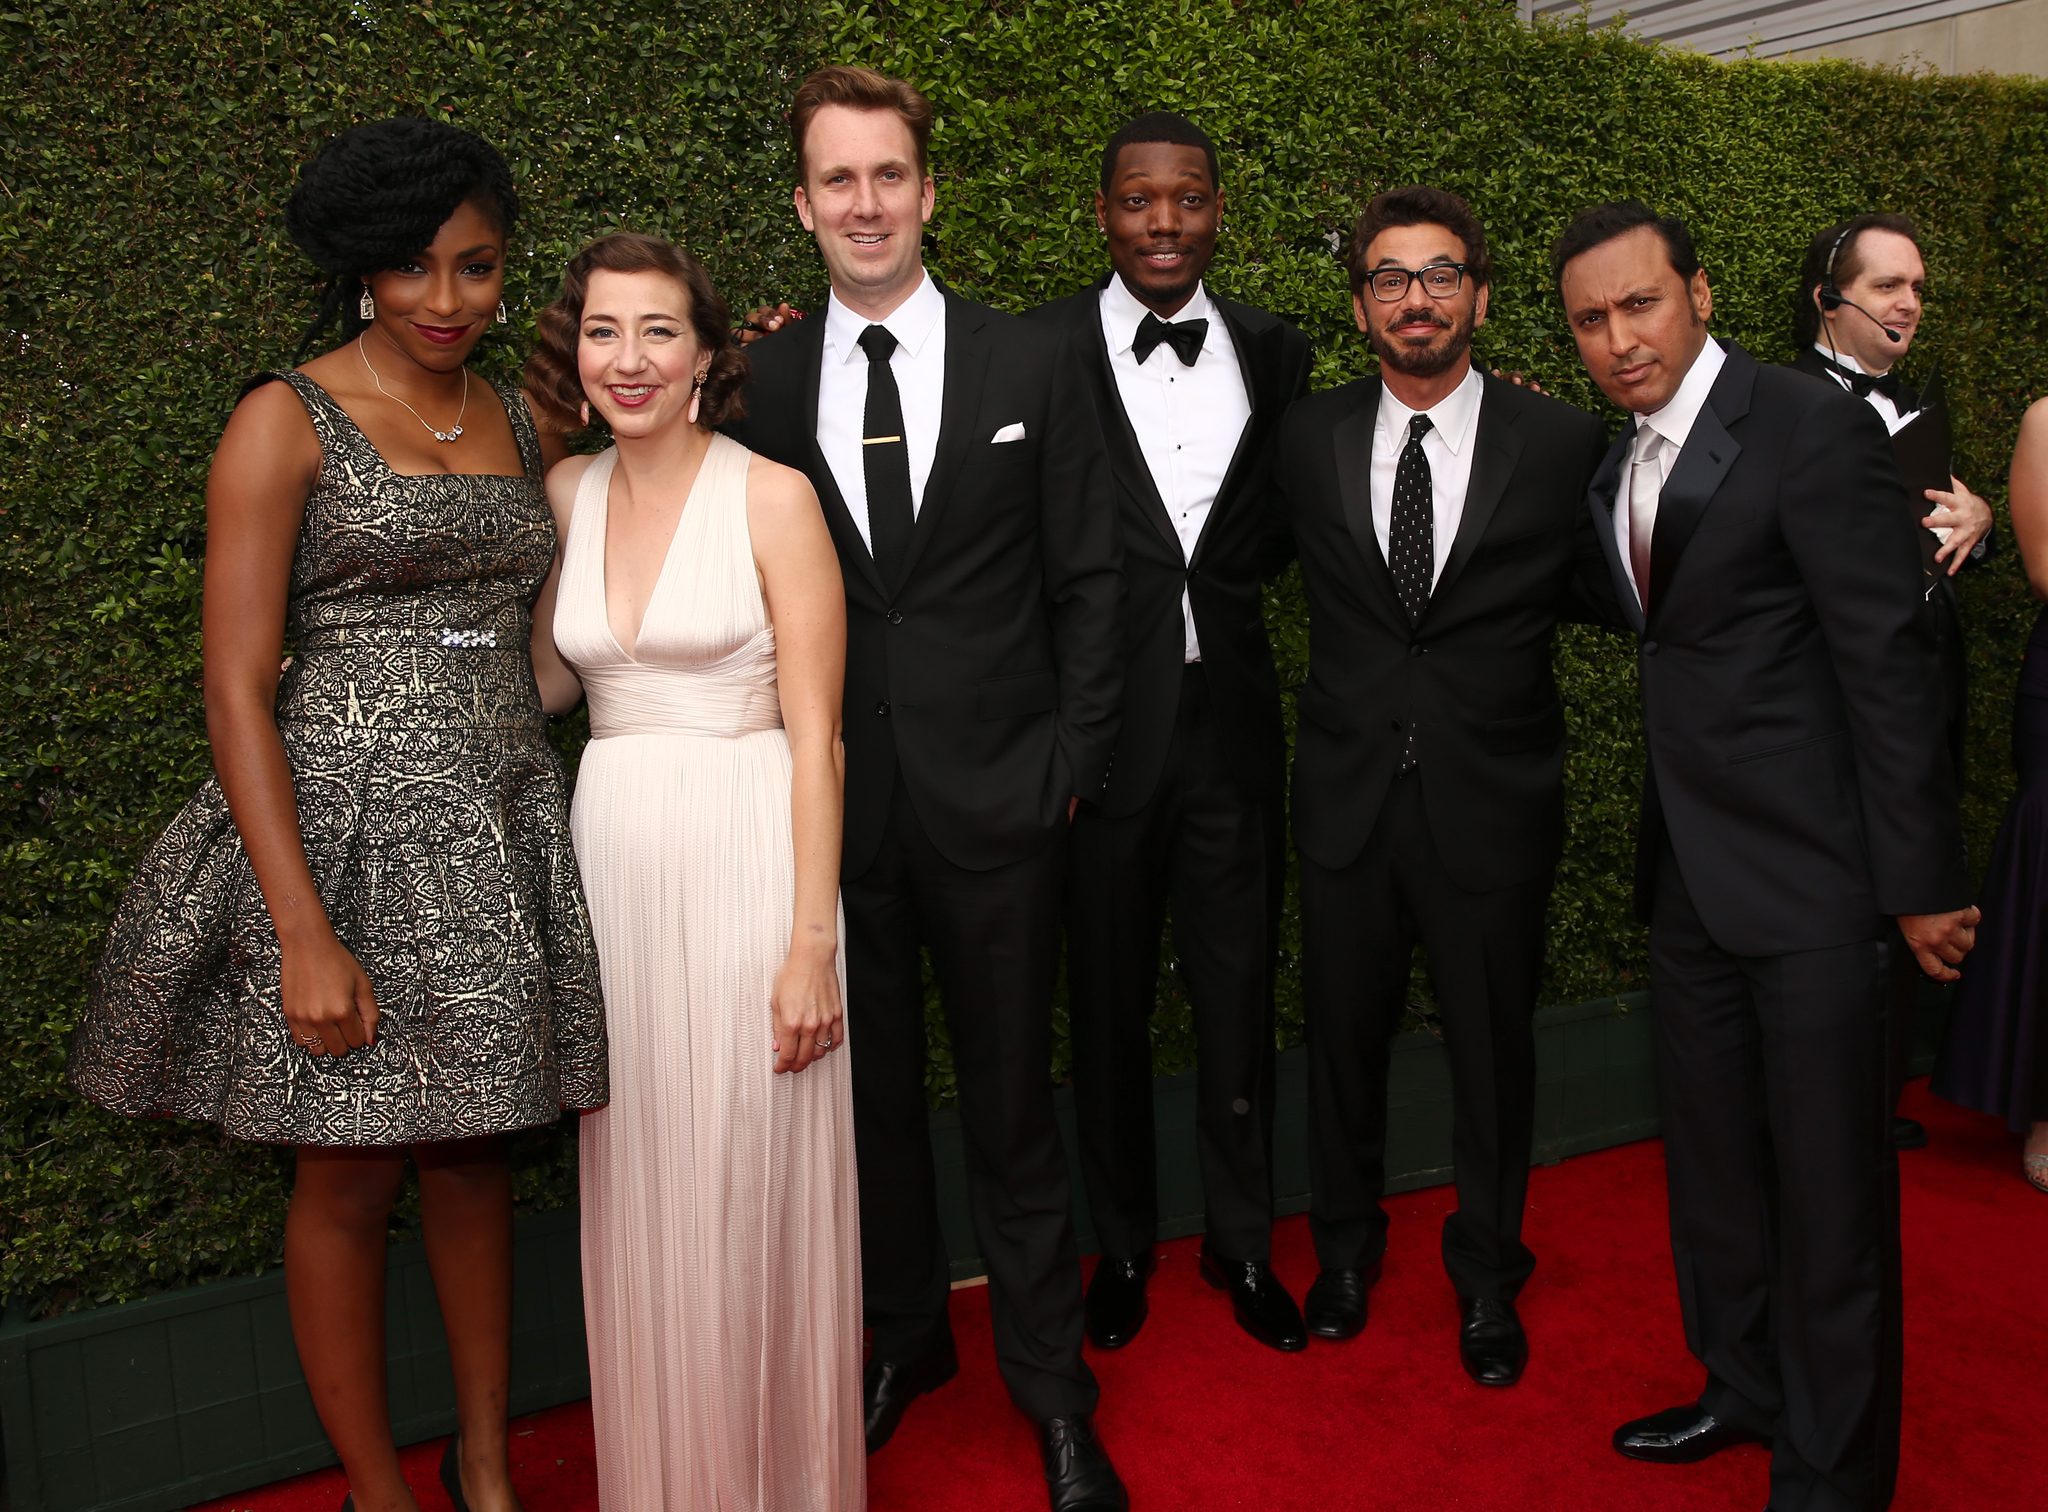 Aasif Mandvi, Kristen Schaal, Al Madrigal, Michael Che and Jordan Klepper at event of The 66th Primetime Emmy Awards (2014)